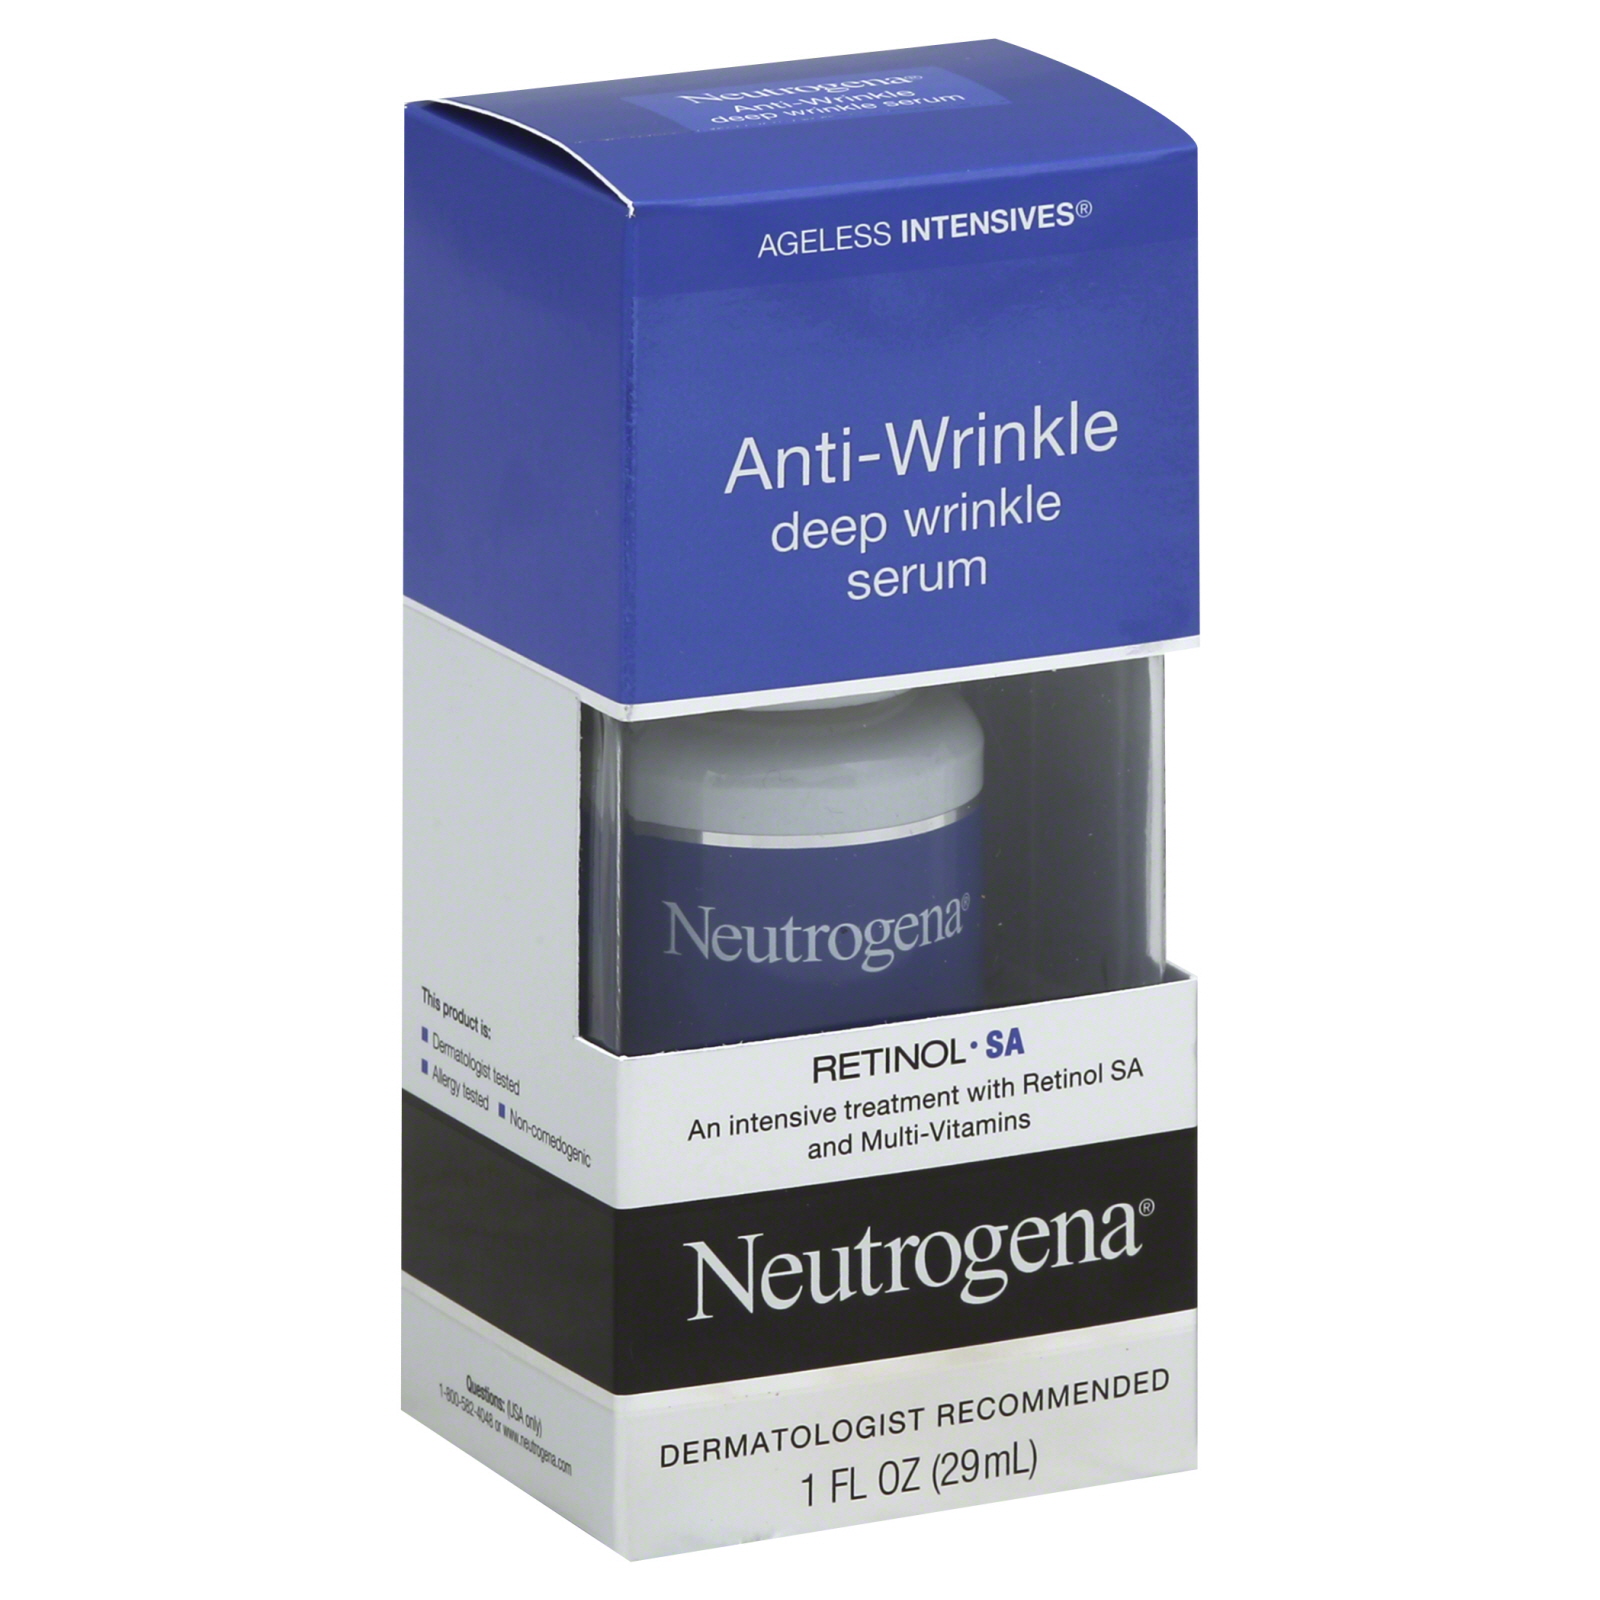 Neutrogena Ageless Intensives Deep Wrinkle Serum, 1 fl oz (29 ml)